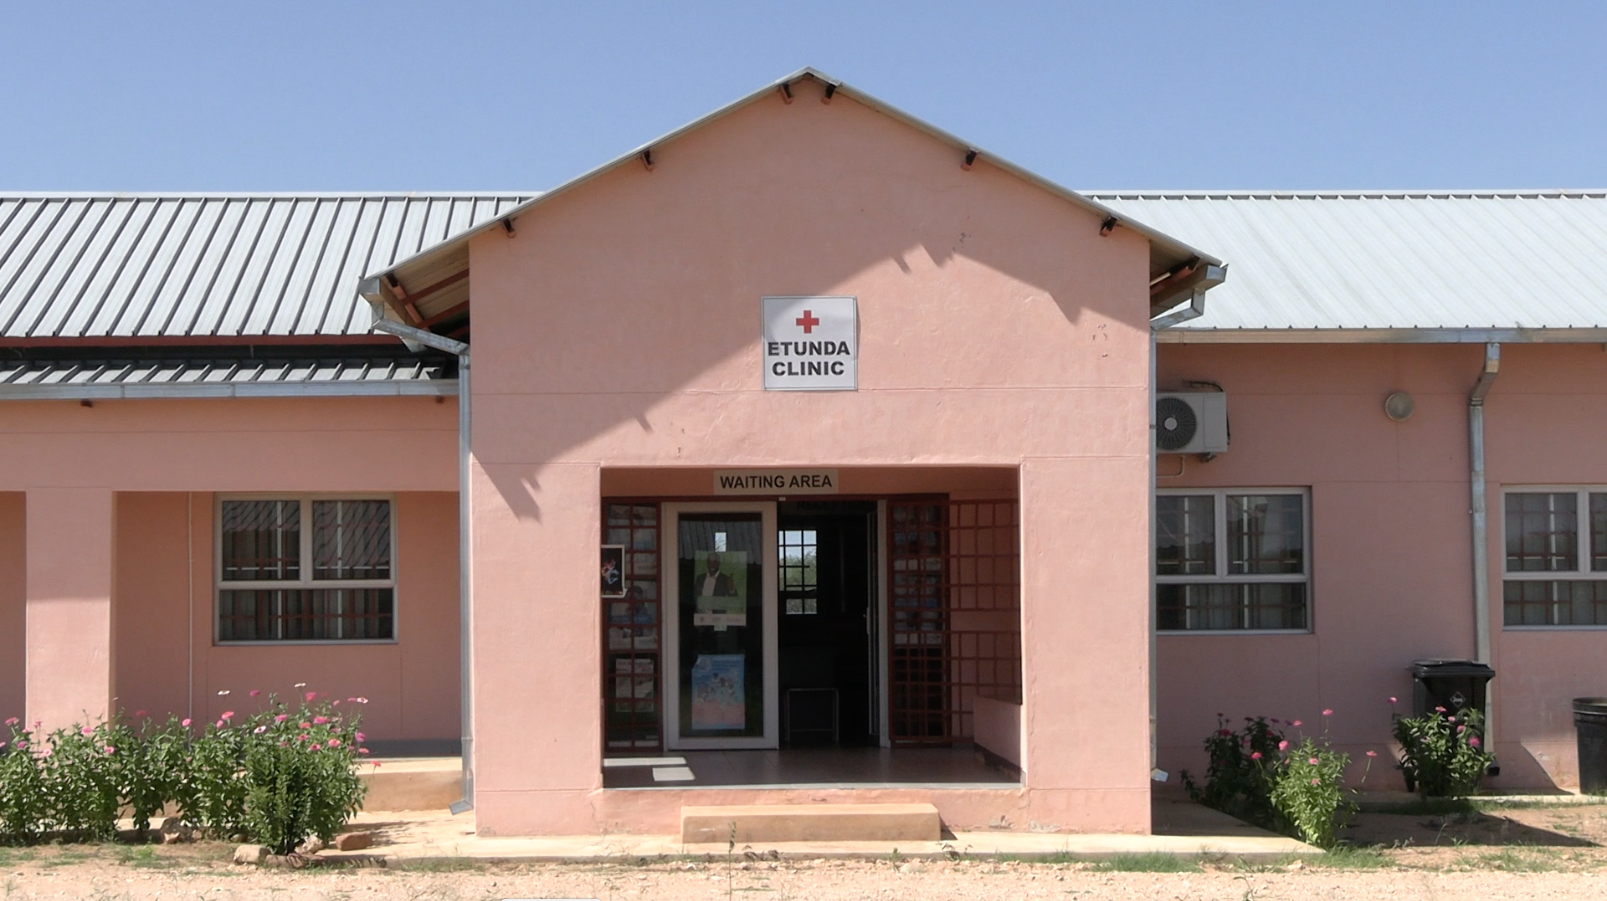 Etunda Clinic: A Beacon of Hope